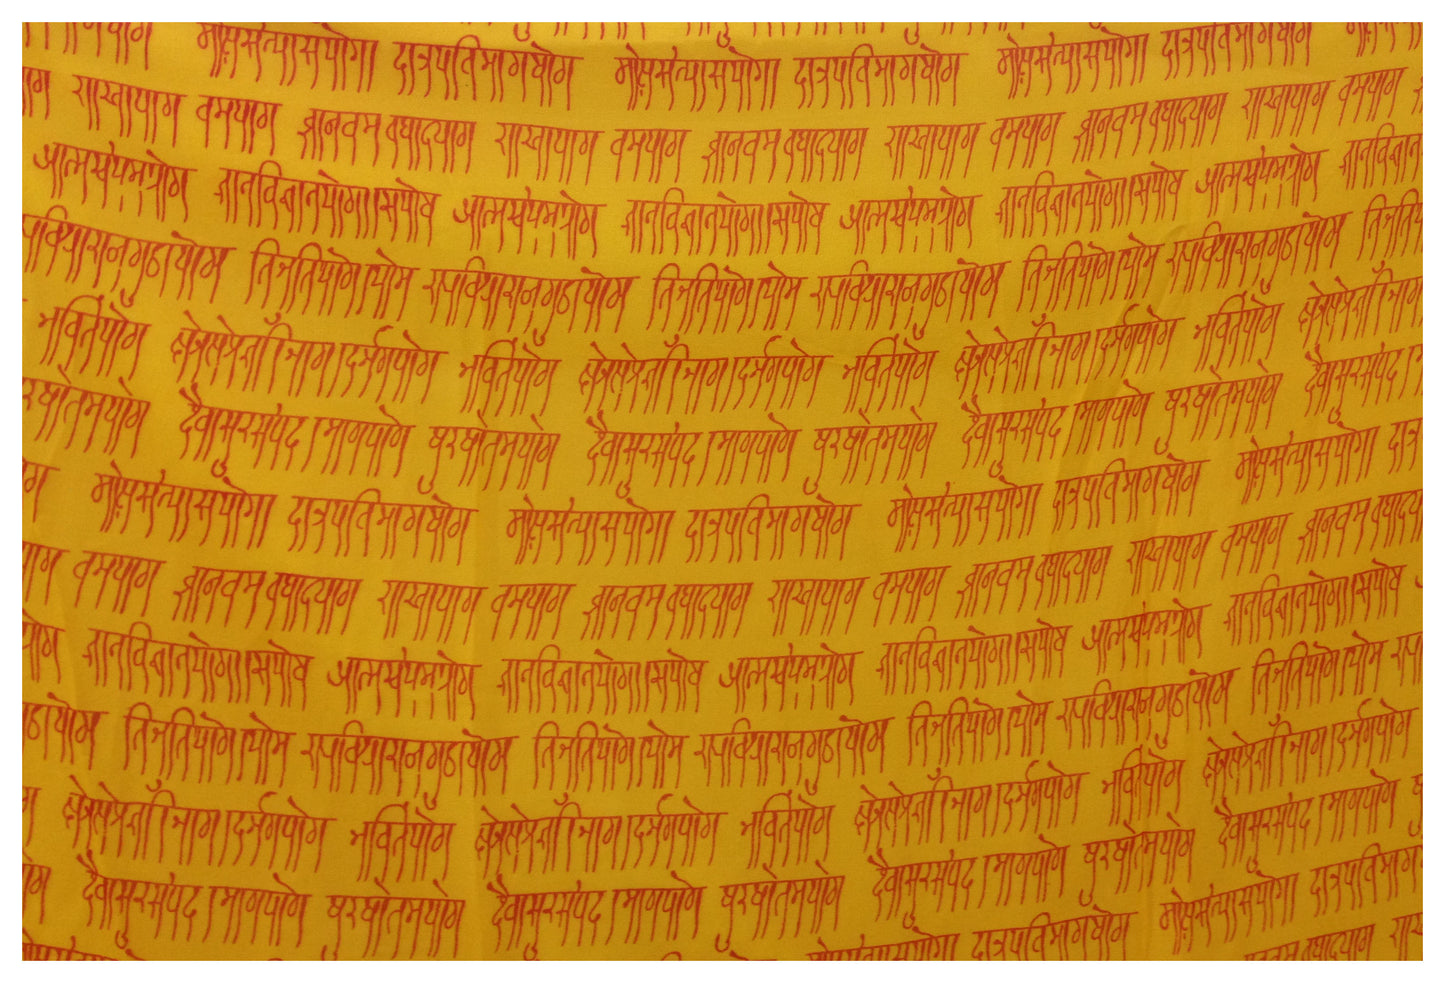 Red Orange Alphabet Print Georgette Fabric